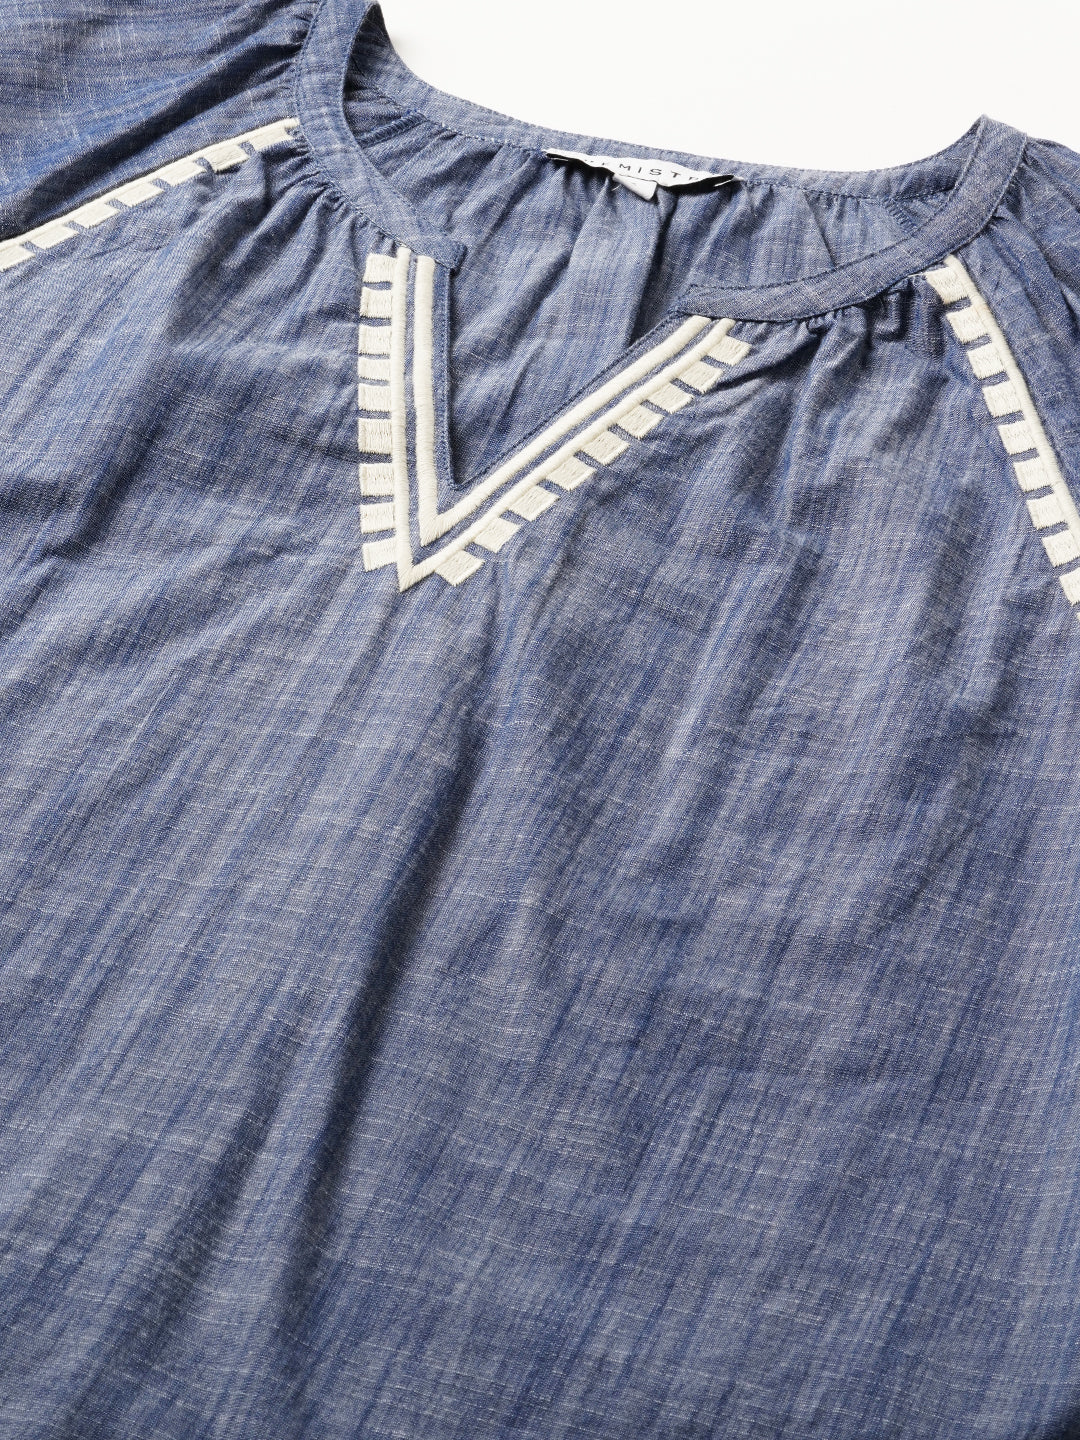 Crosshatch Cotton Chambray Embroidered Raglan Sleeve Tunic Top